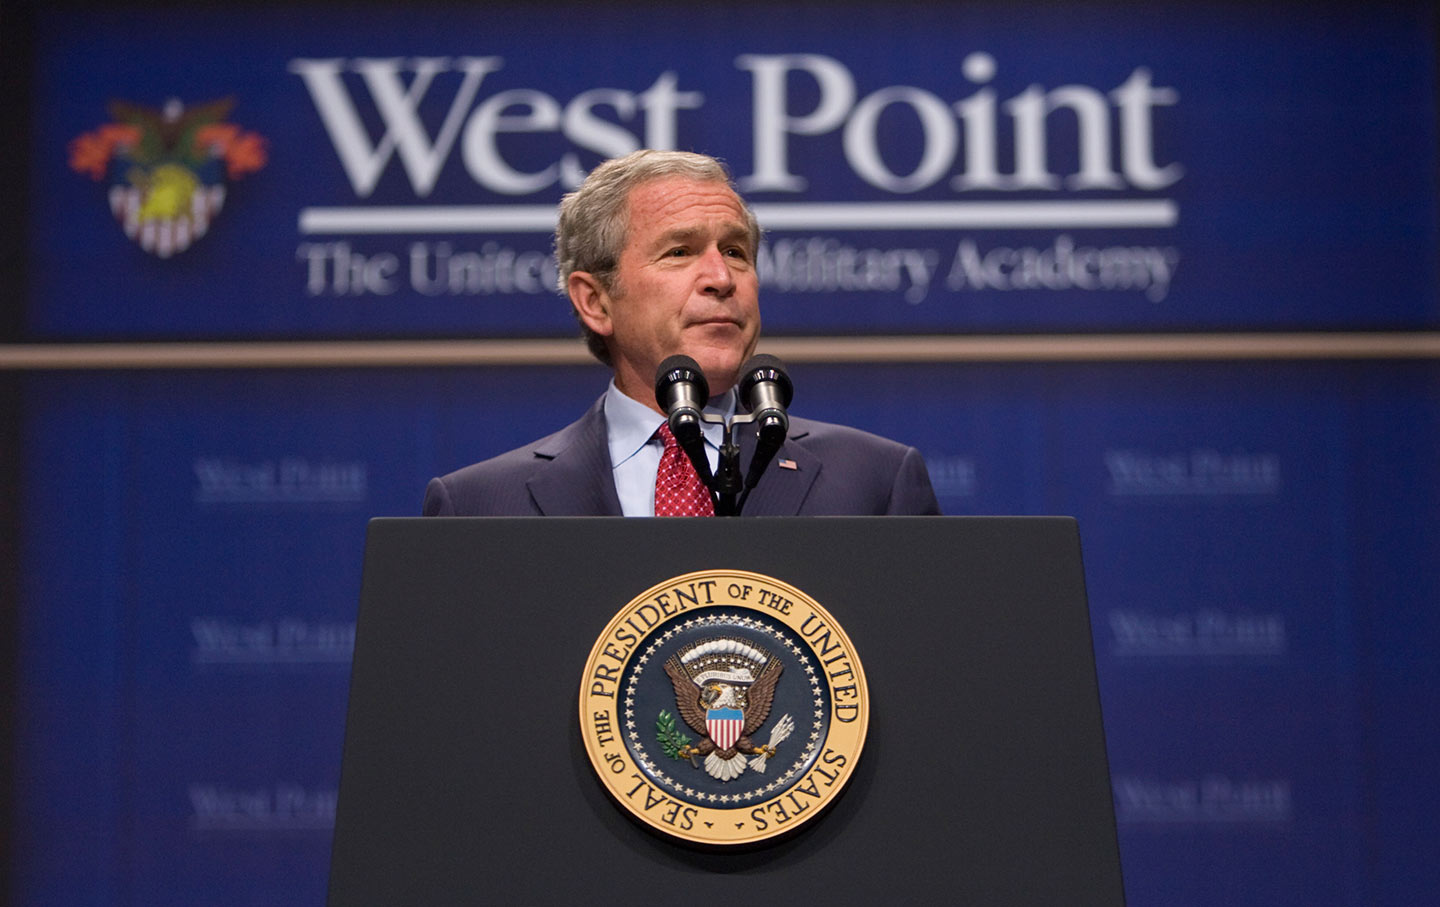 George W. Bush at West Point